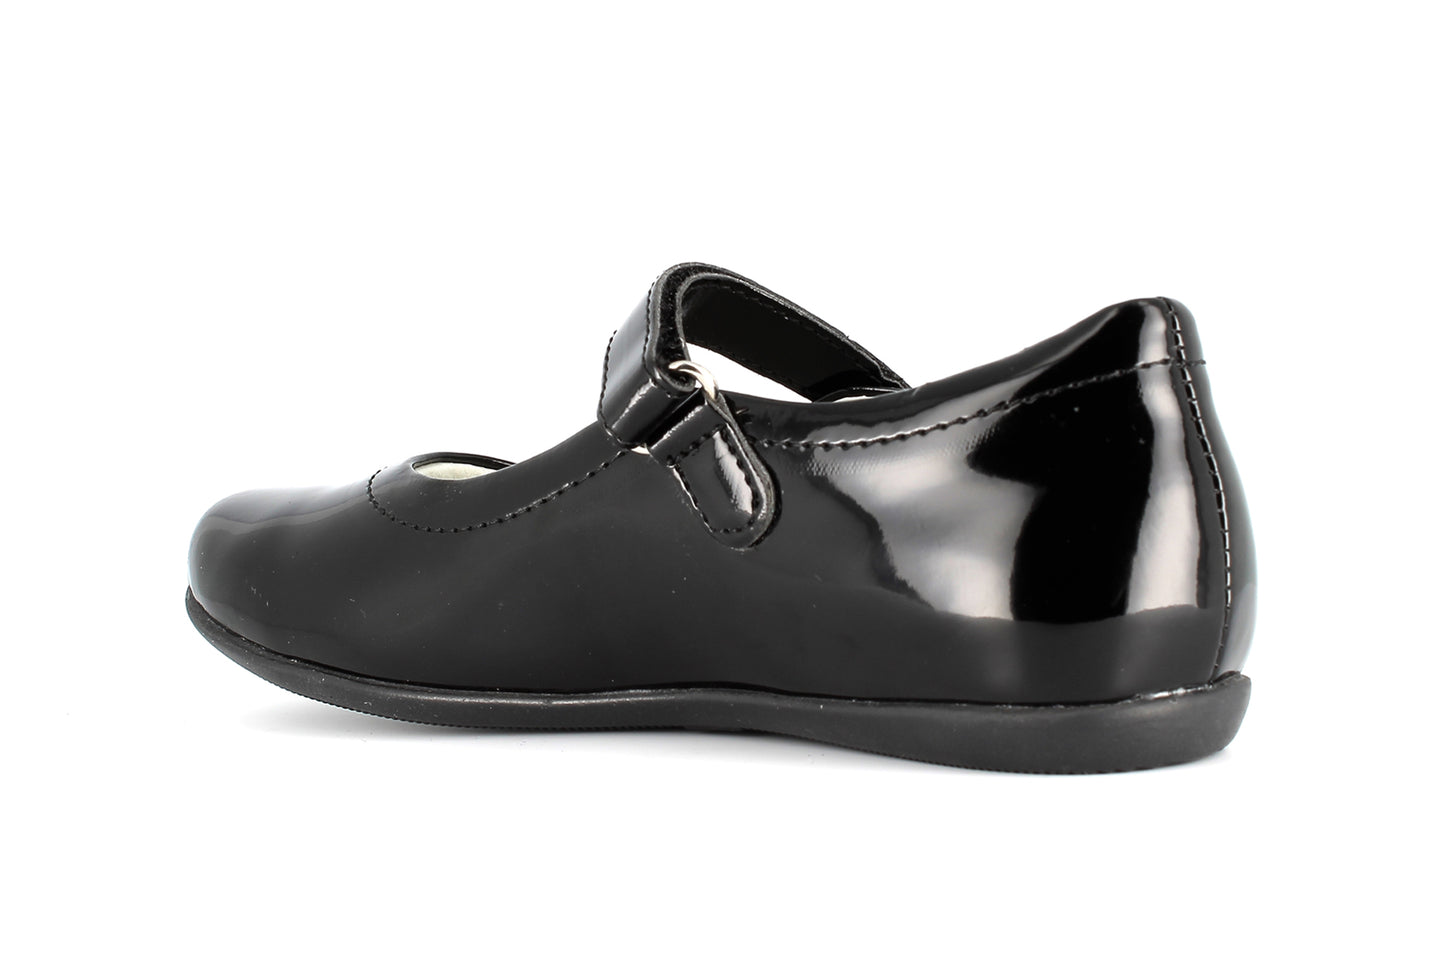 Zura Black Patent Leather Ballet Flat Girls School Shoe